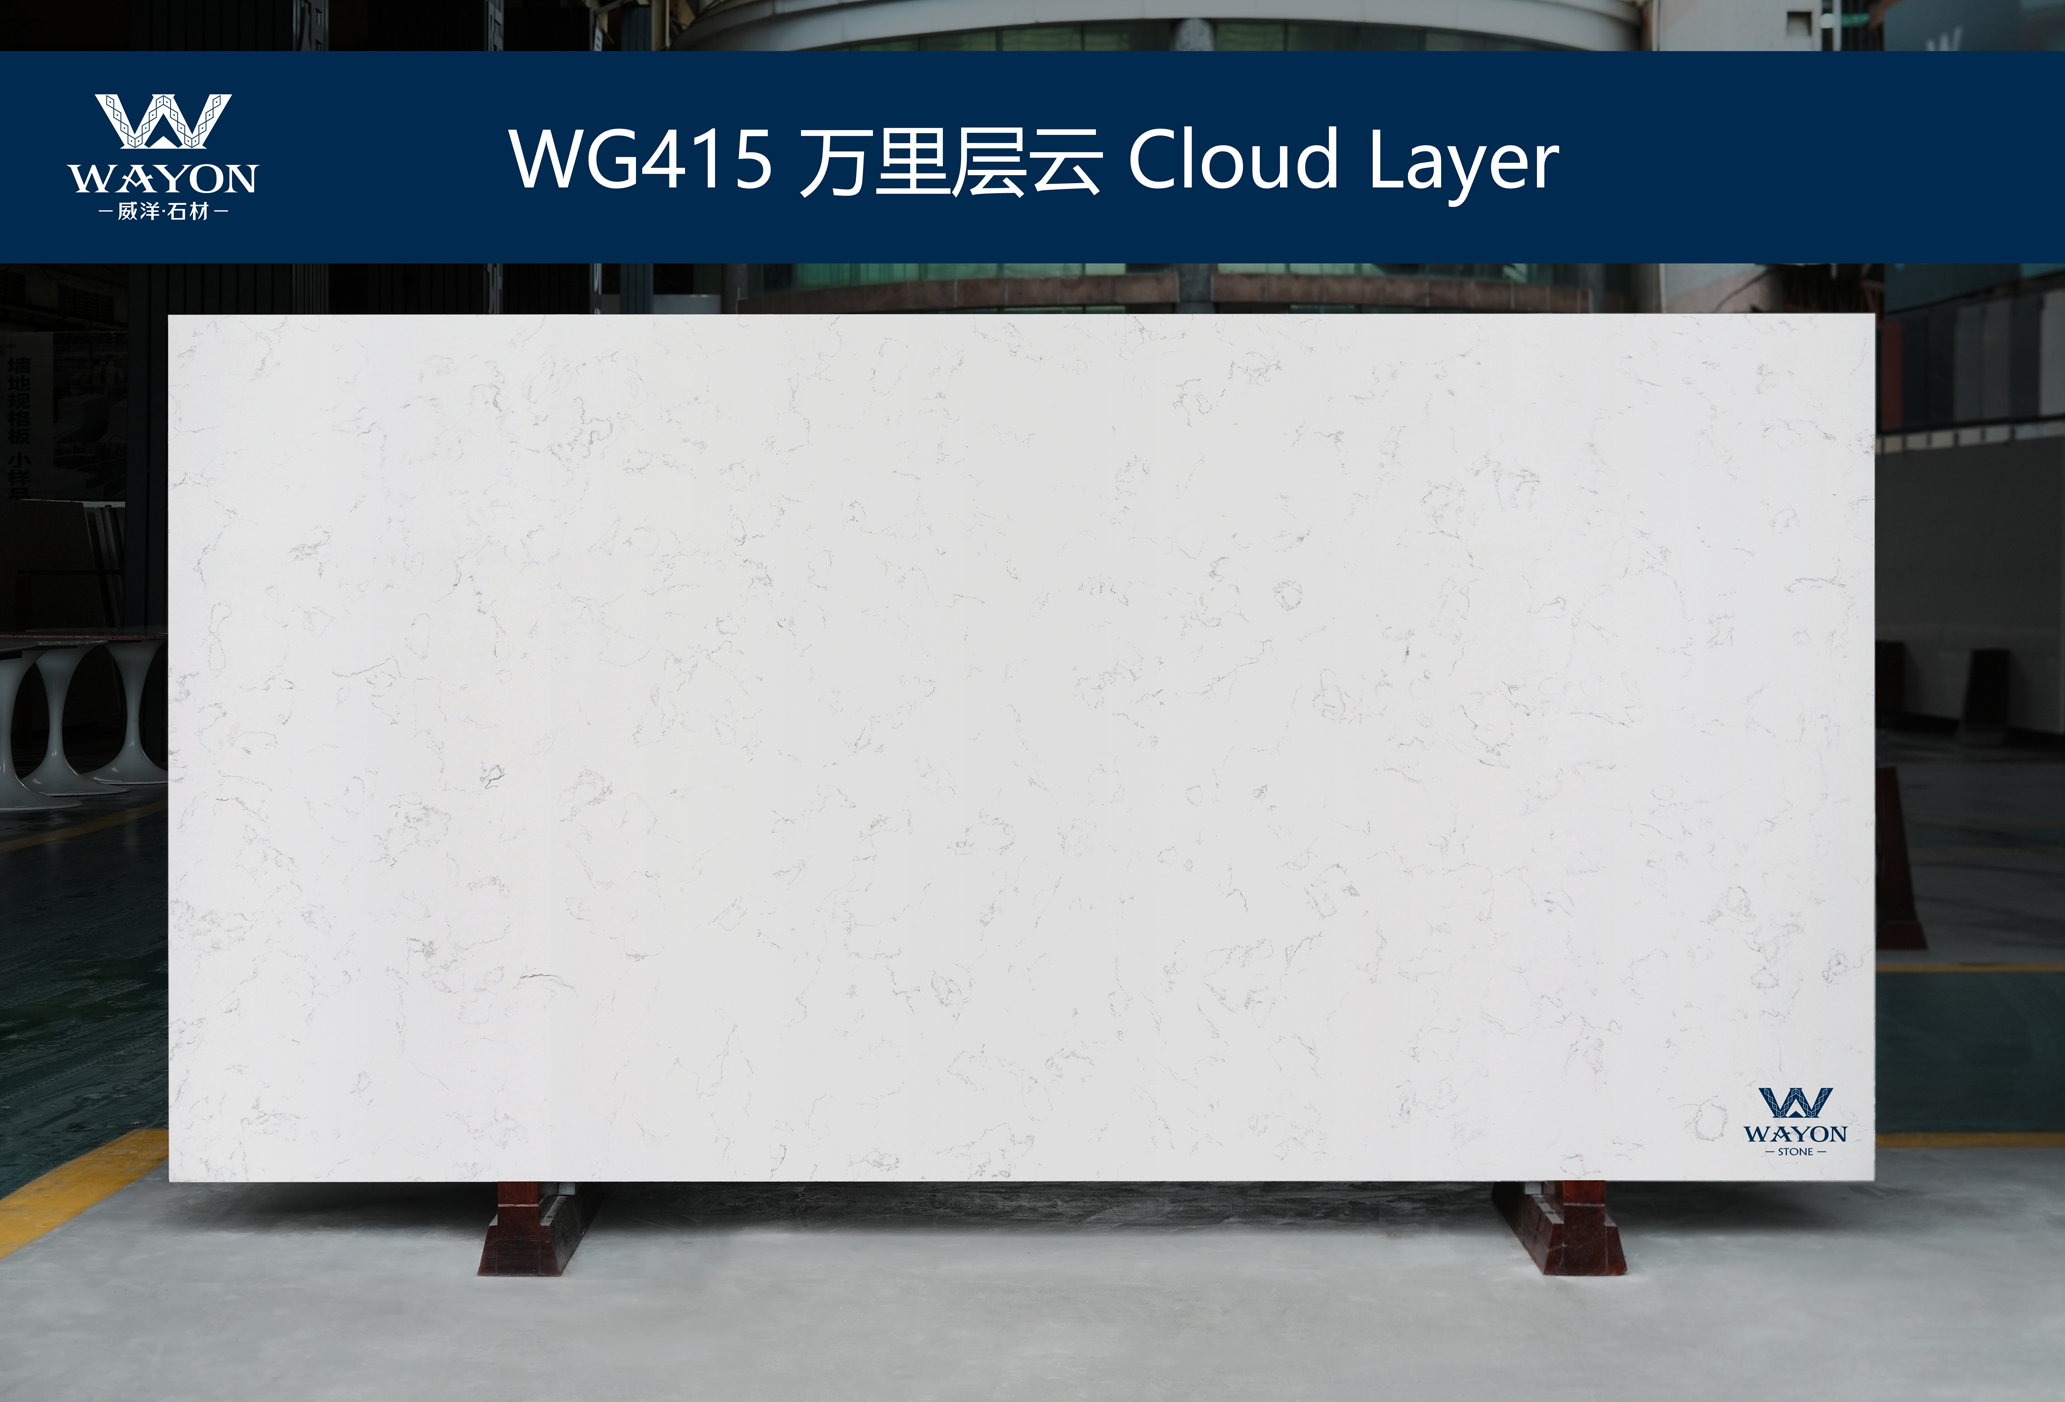 WG415 Cloud Layer